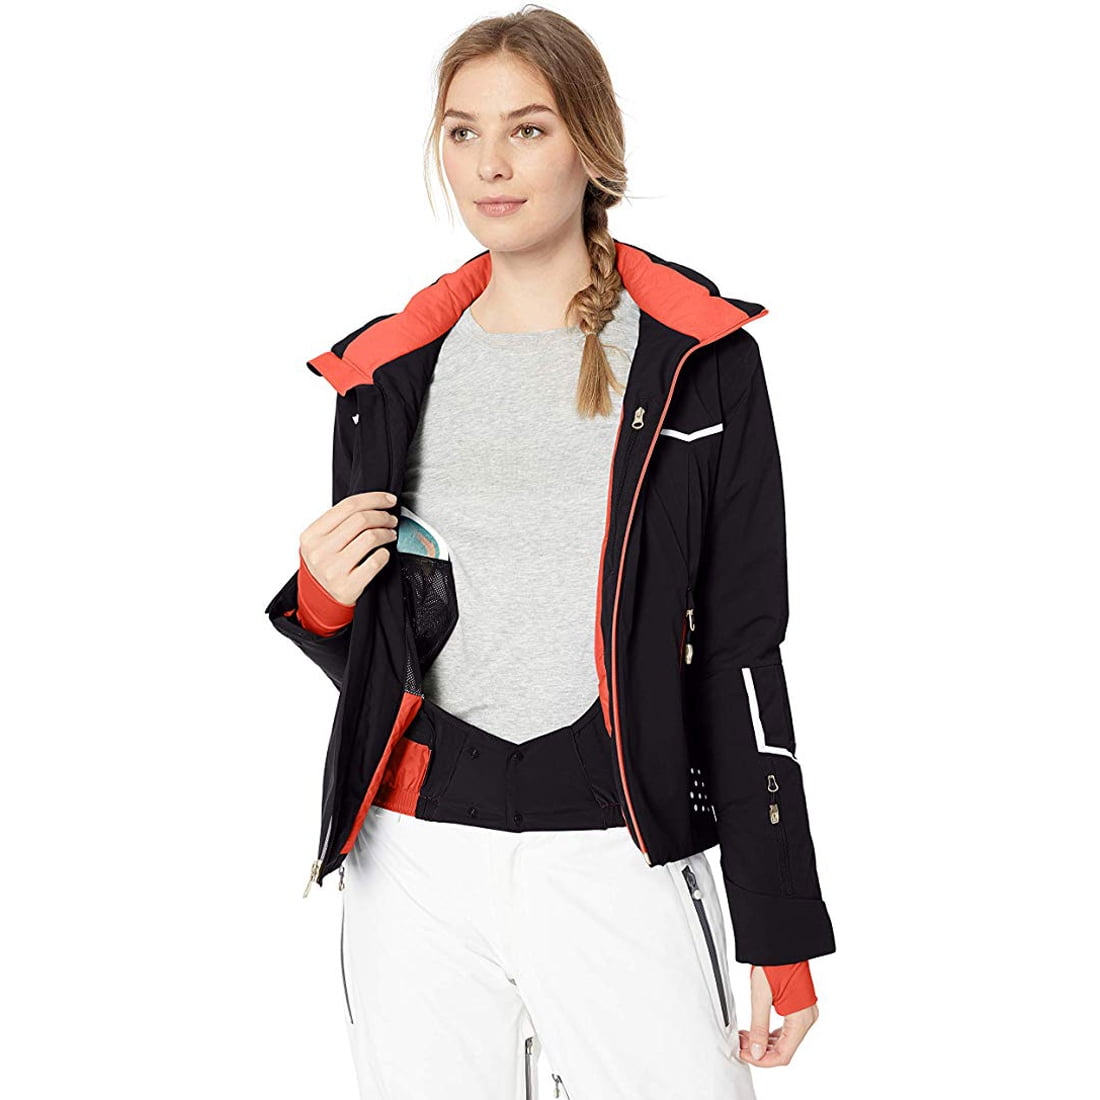 spyder venture womens ski jacket